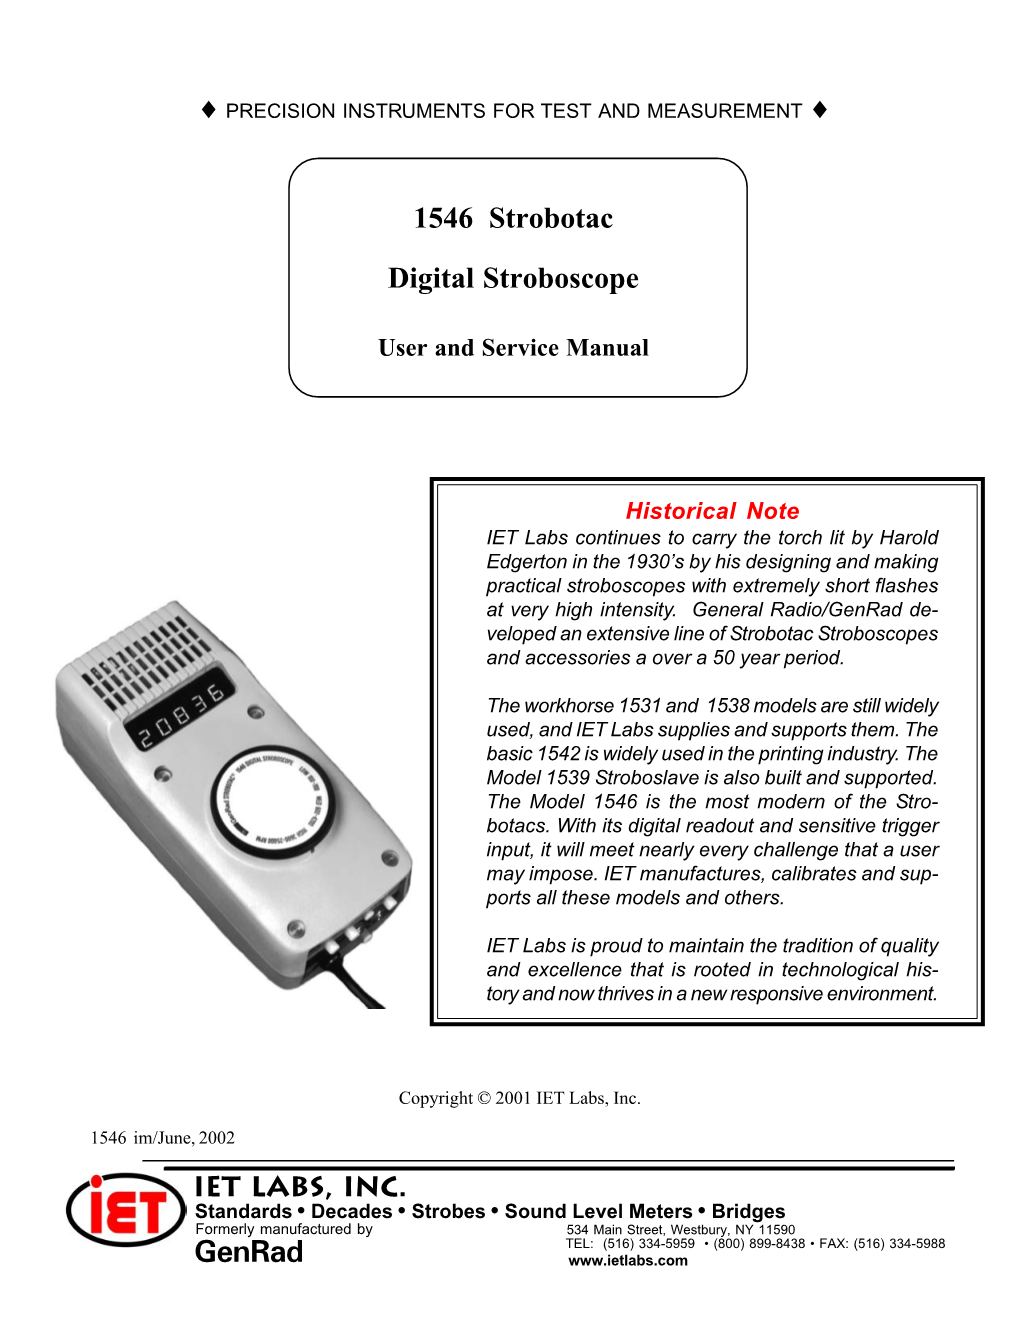 1546 Strobotac Digital Stroboscope User and Service Manual